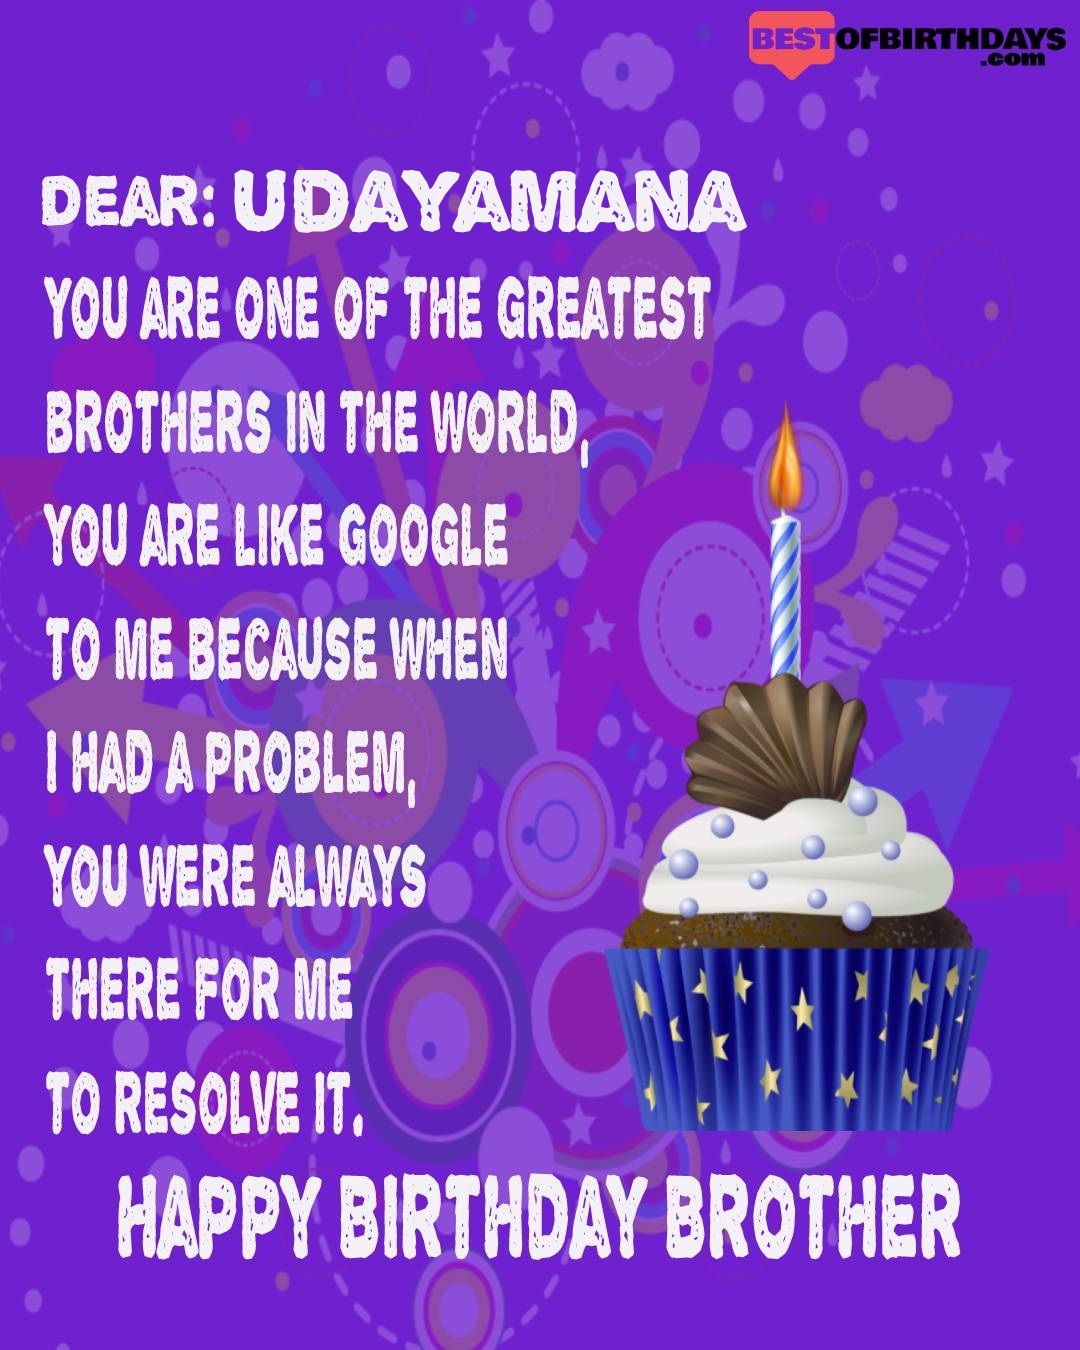 Happy birthday udayamana bhai brother bro